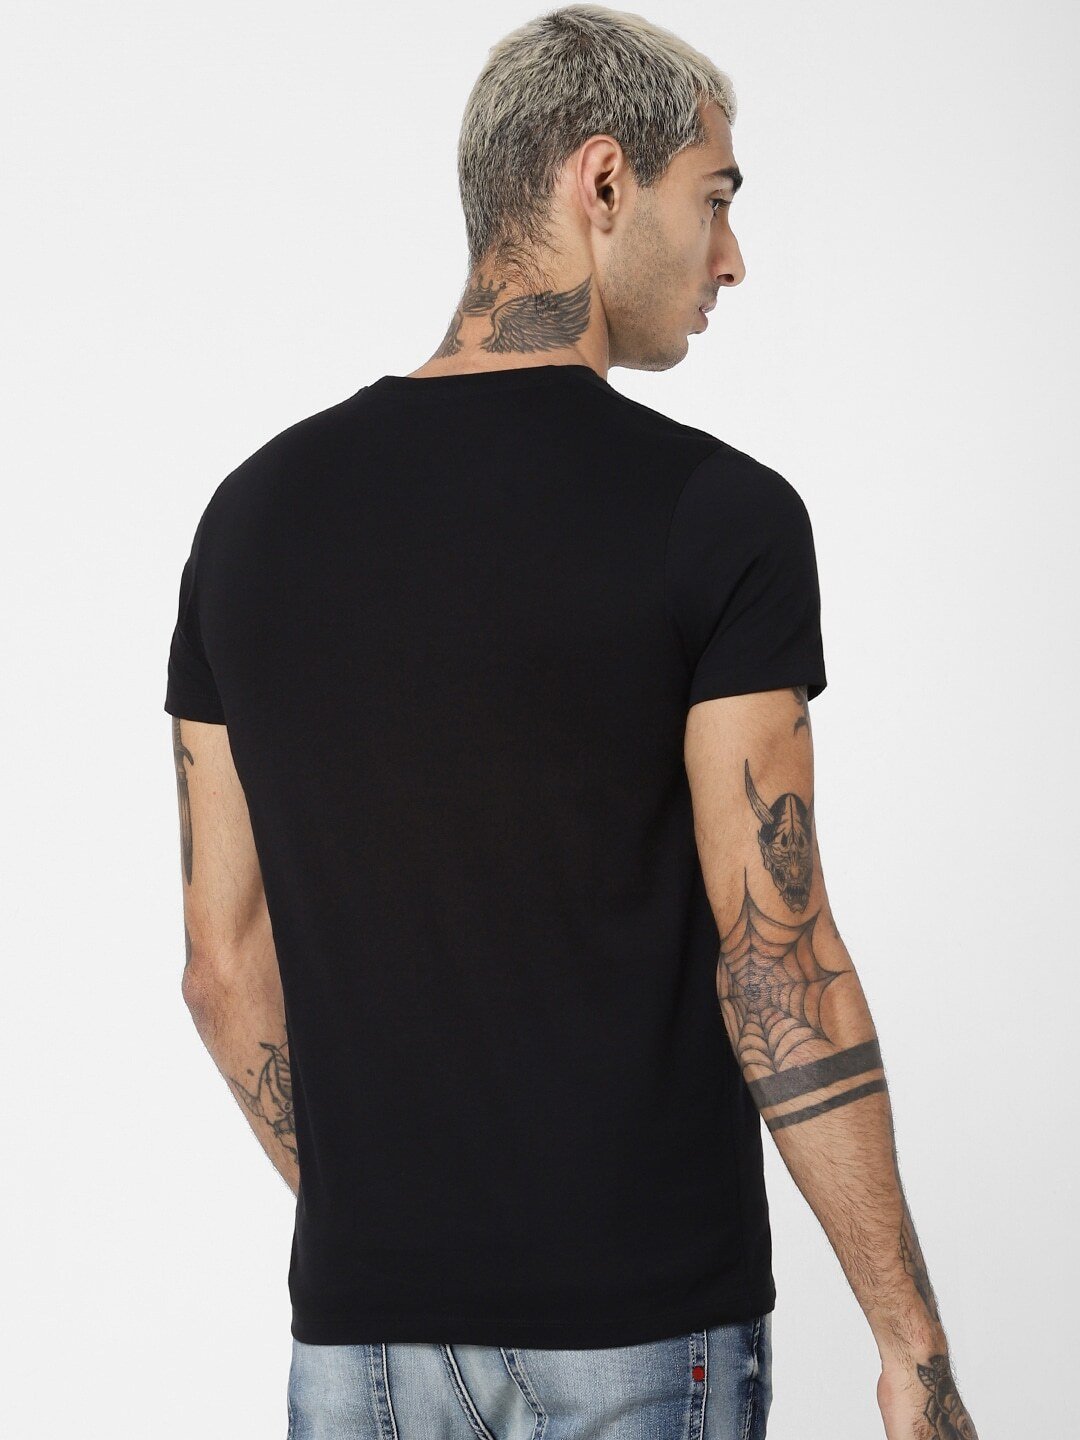 Jack Jones Men Black Slim Fit Printed Round Neck Sustainable Pure Cotton T-shirt-2118889